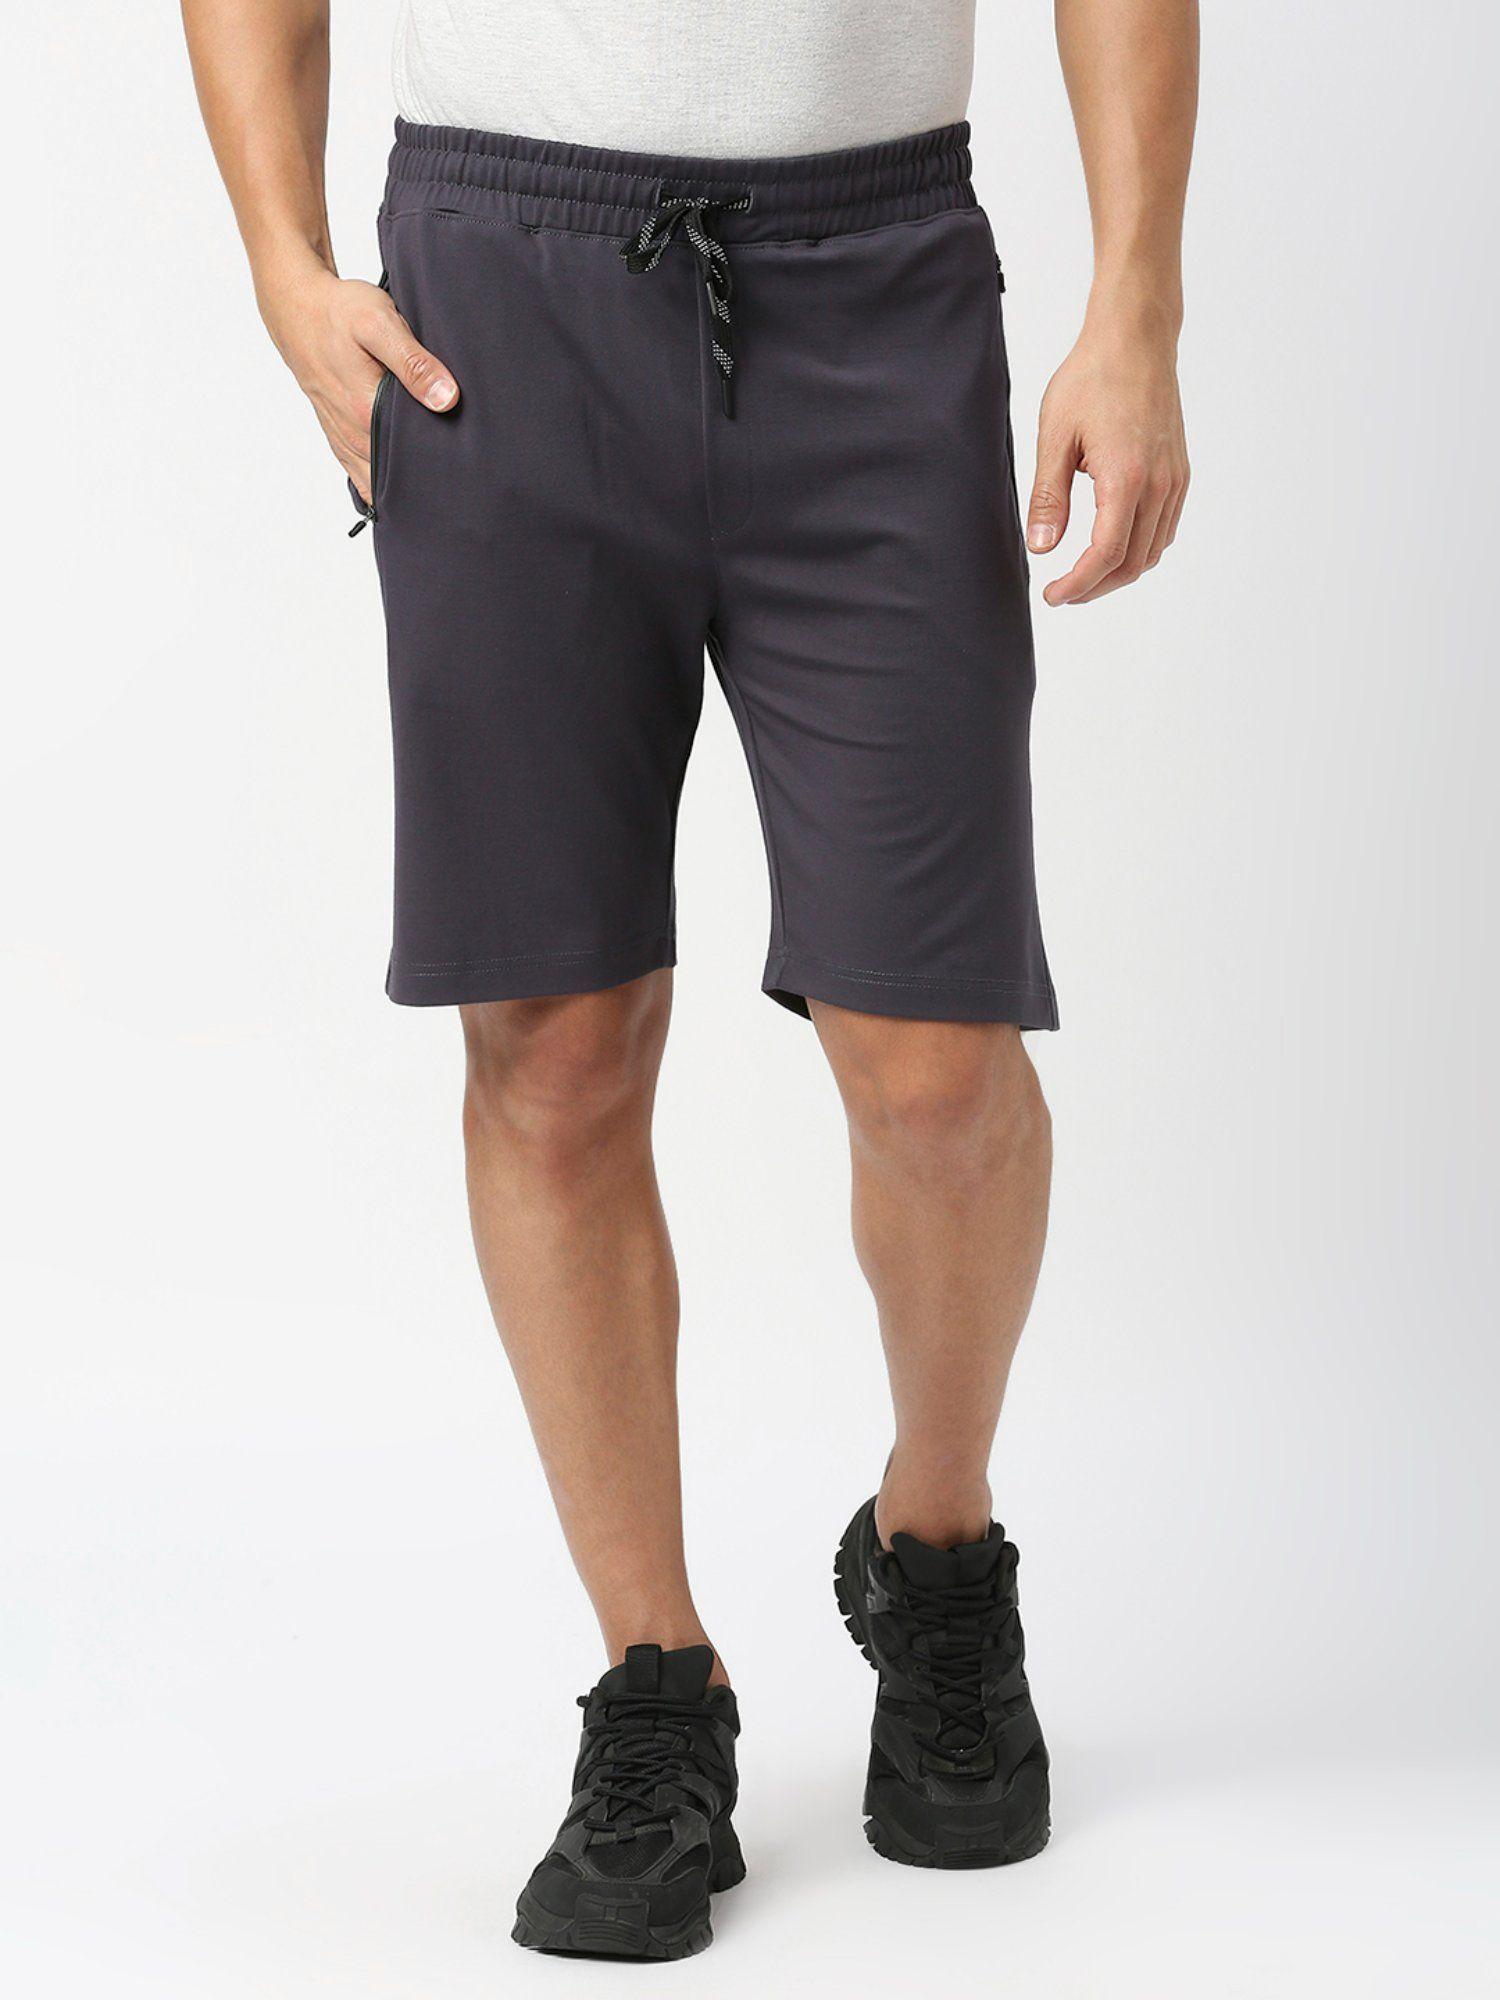 charcoal-grey-tencel-lycra-shorts-with-zipped-pocket